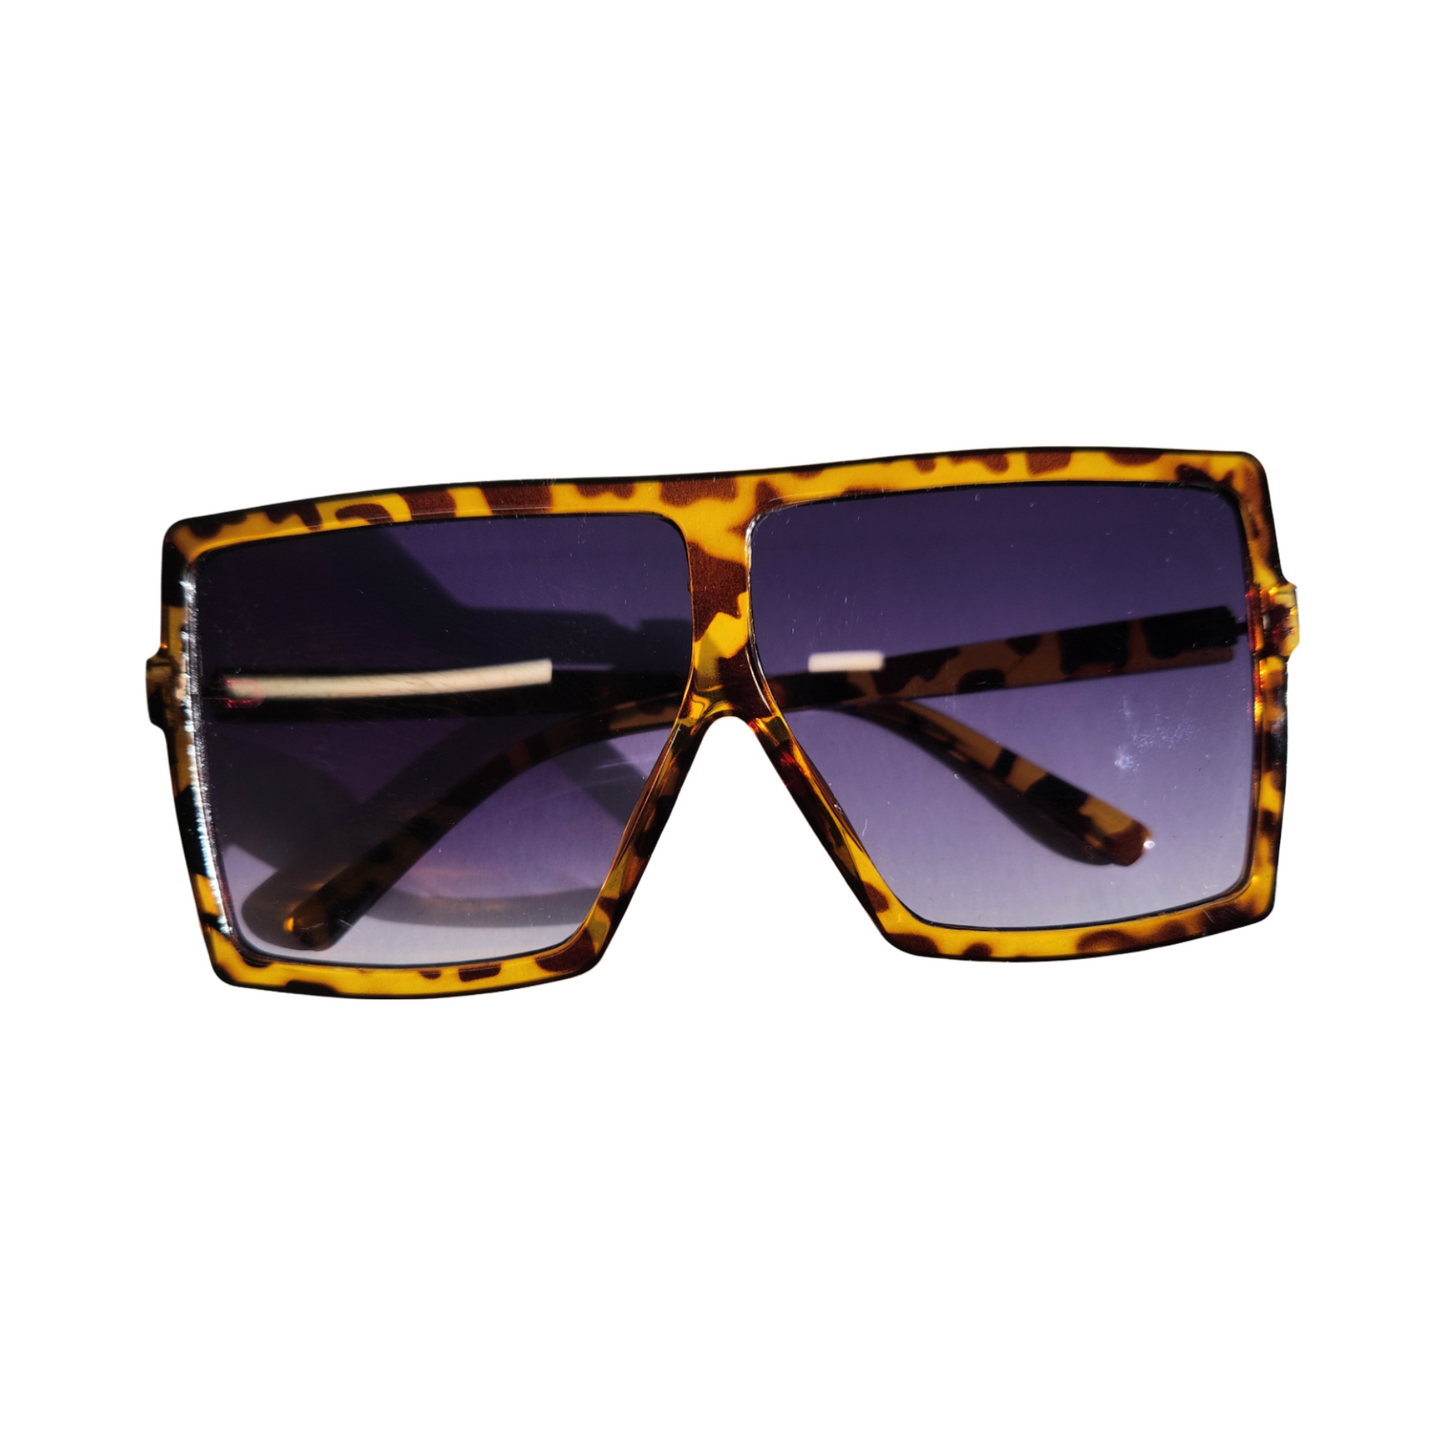 Storm Trooper Sunglasses - Tortoise